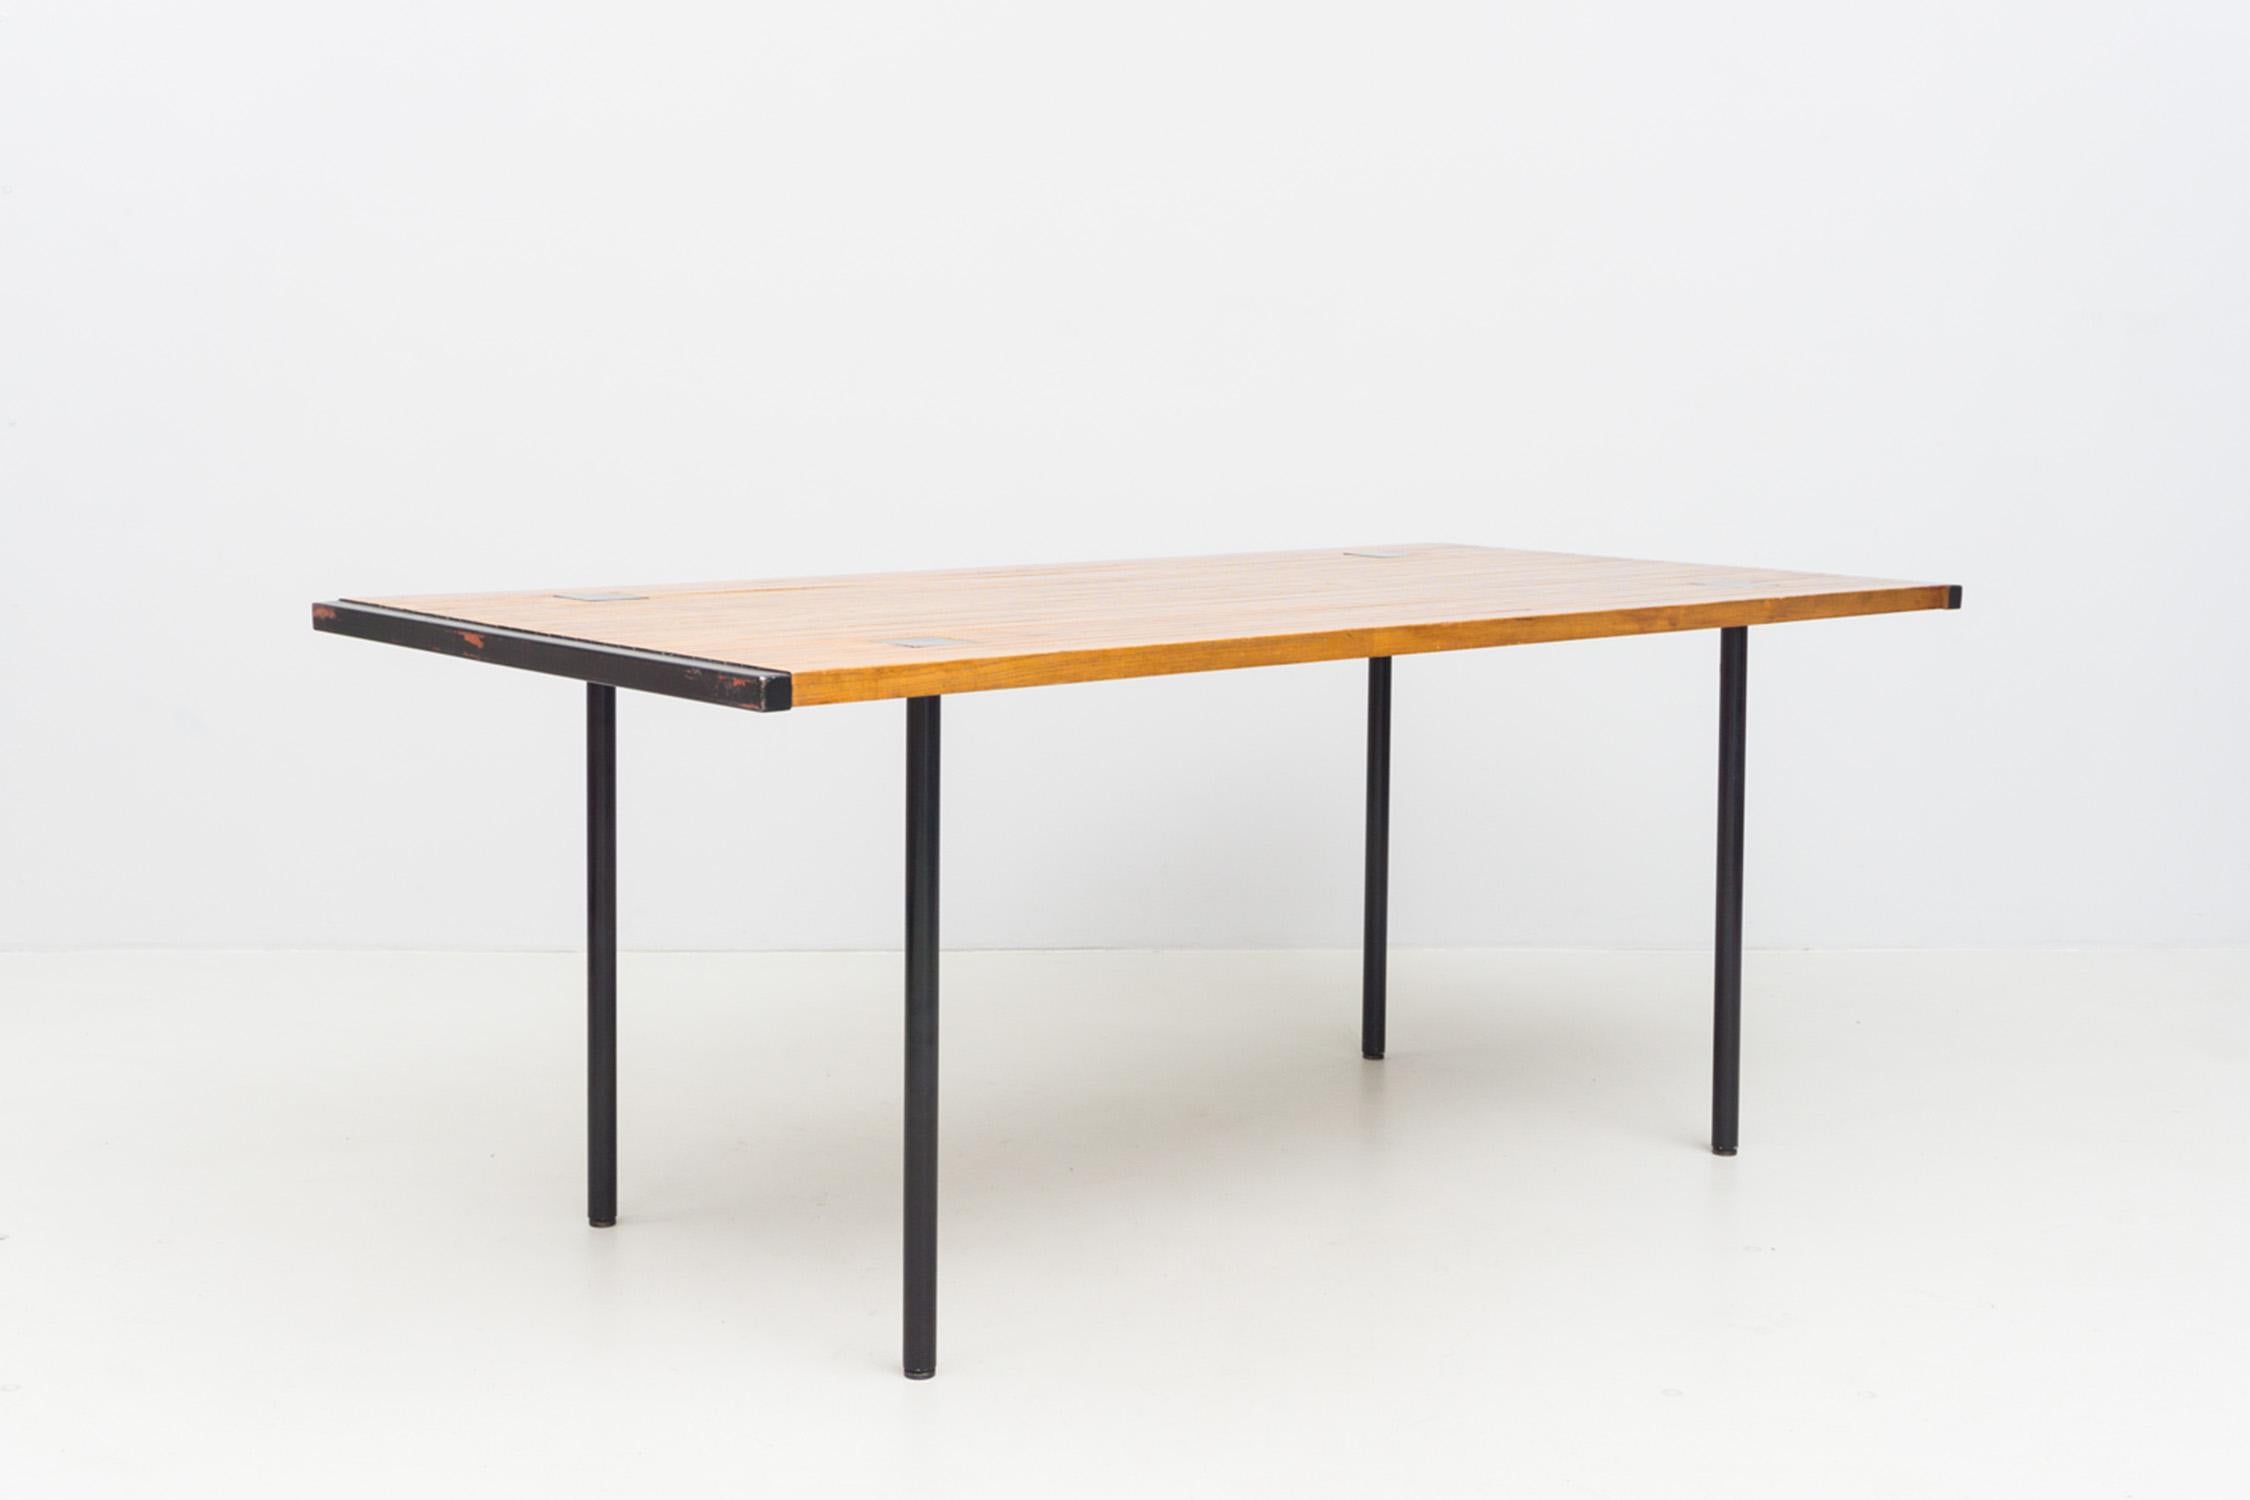 Italian Wooden, adjustable table by Ettore Sottsass, circa 1957